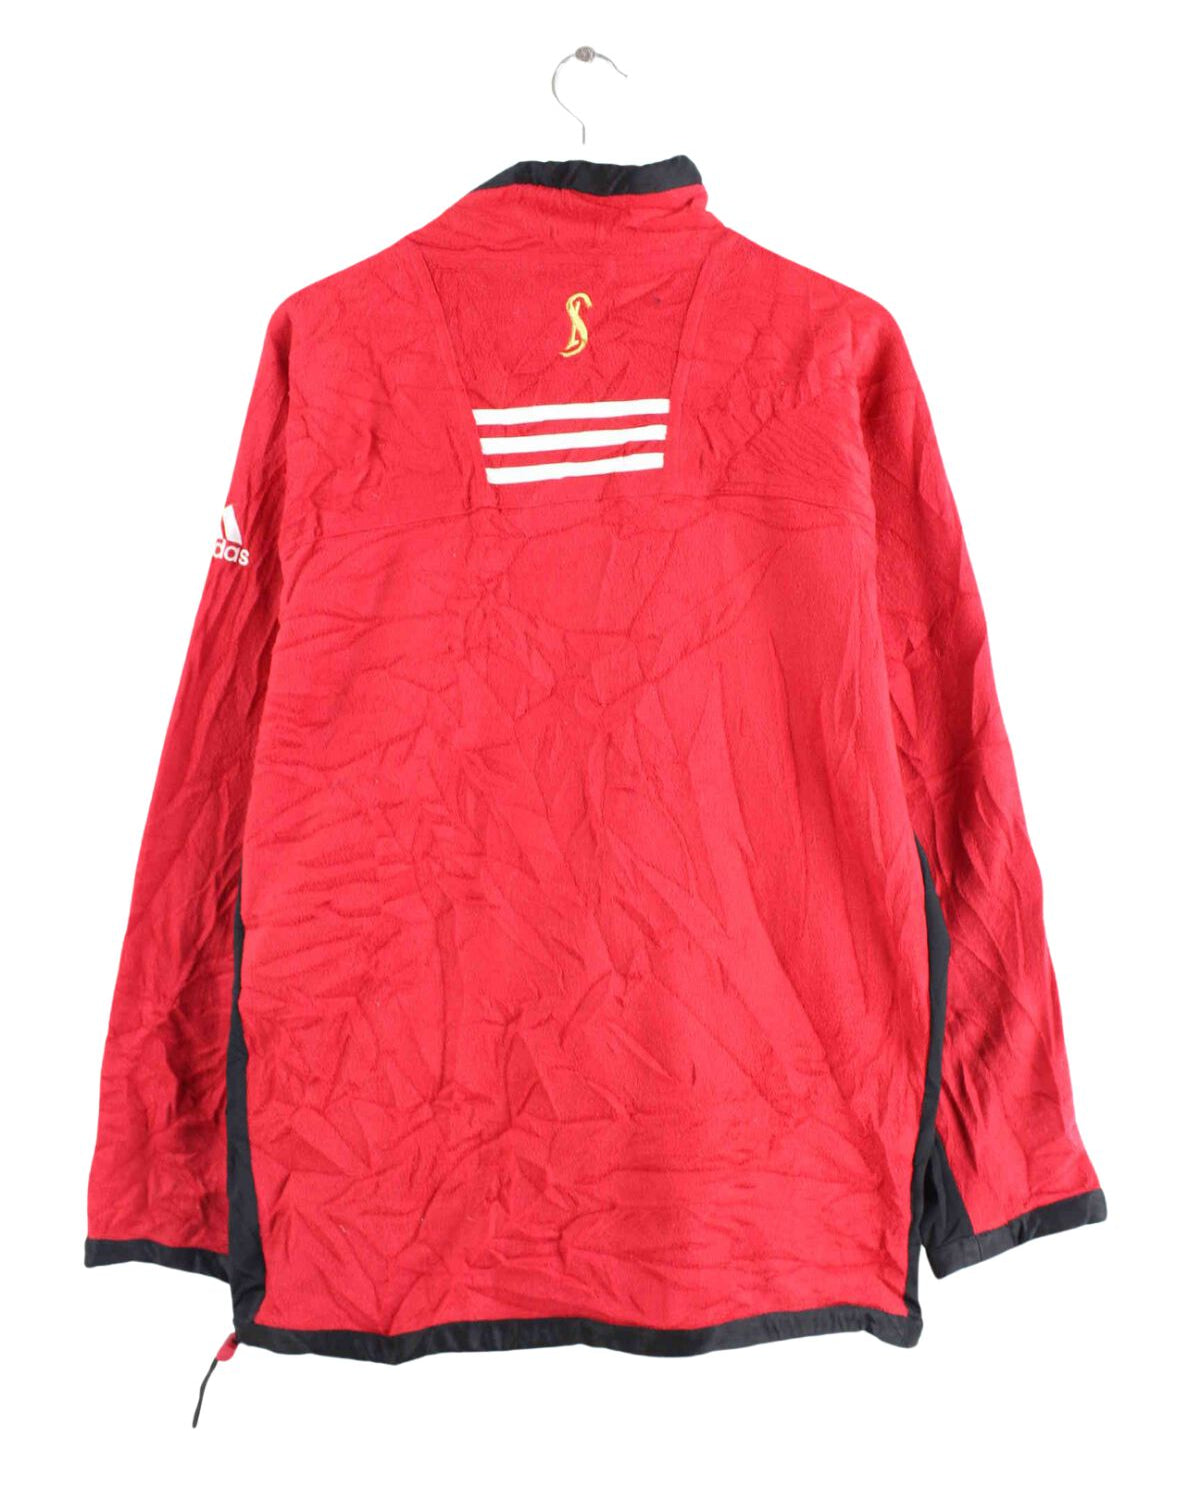 Adidas 90s Vintage Fleece Half Zip Sweater Rot L (back image)